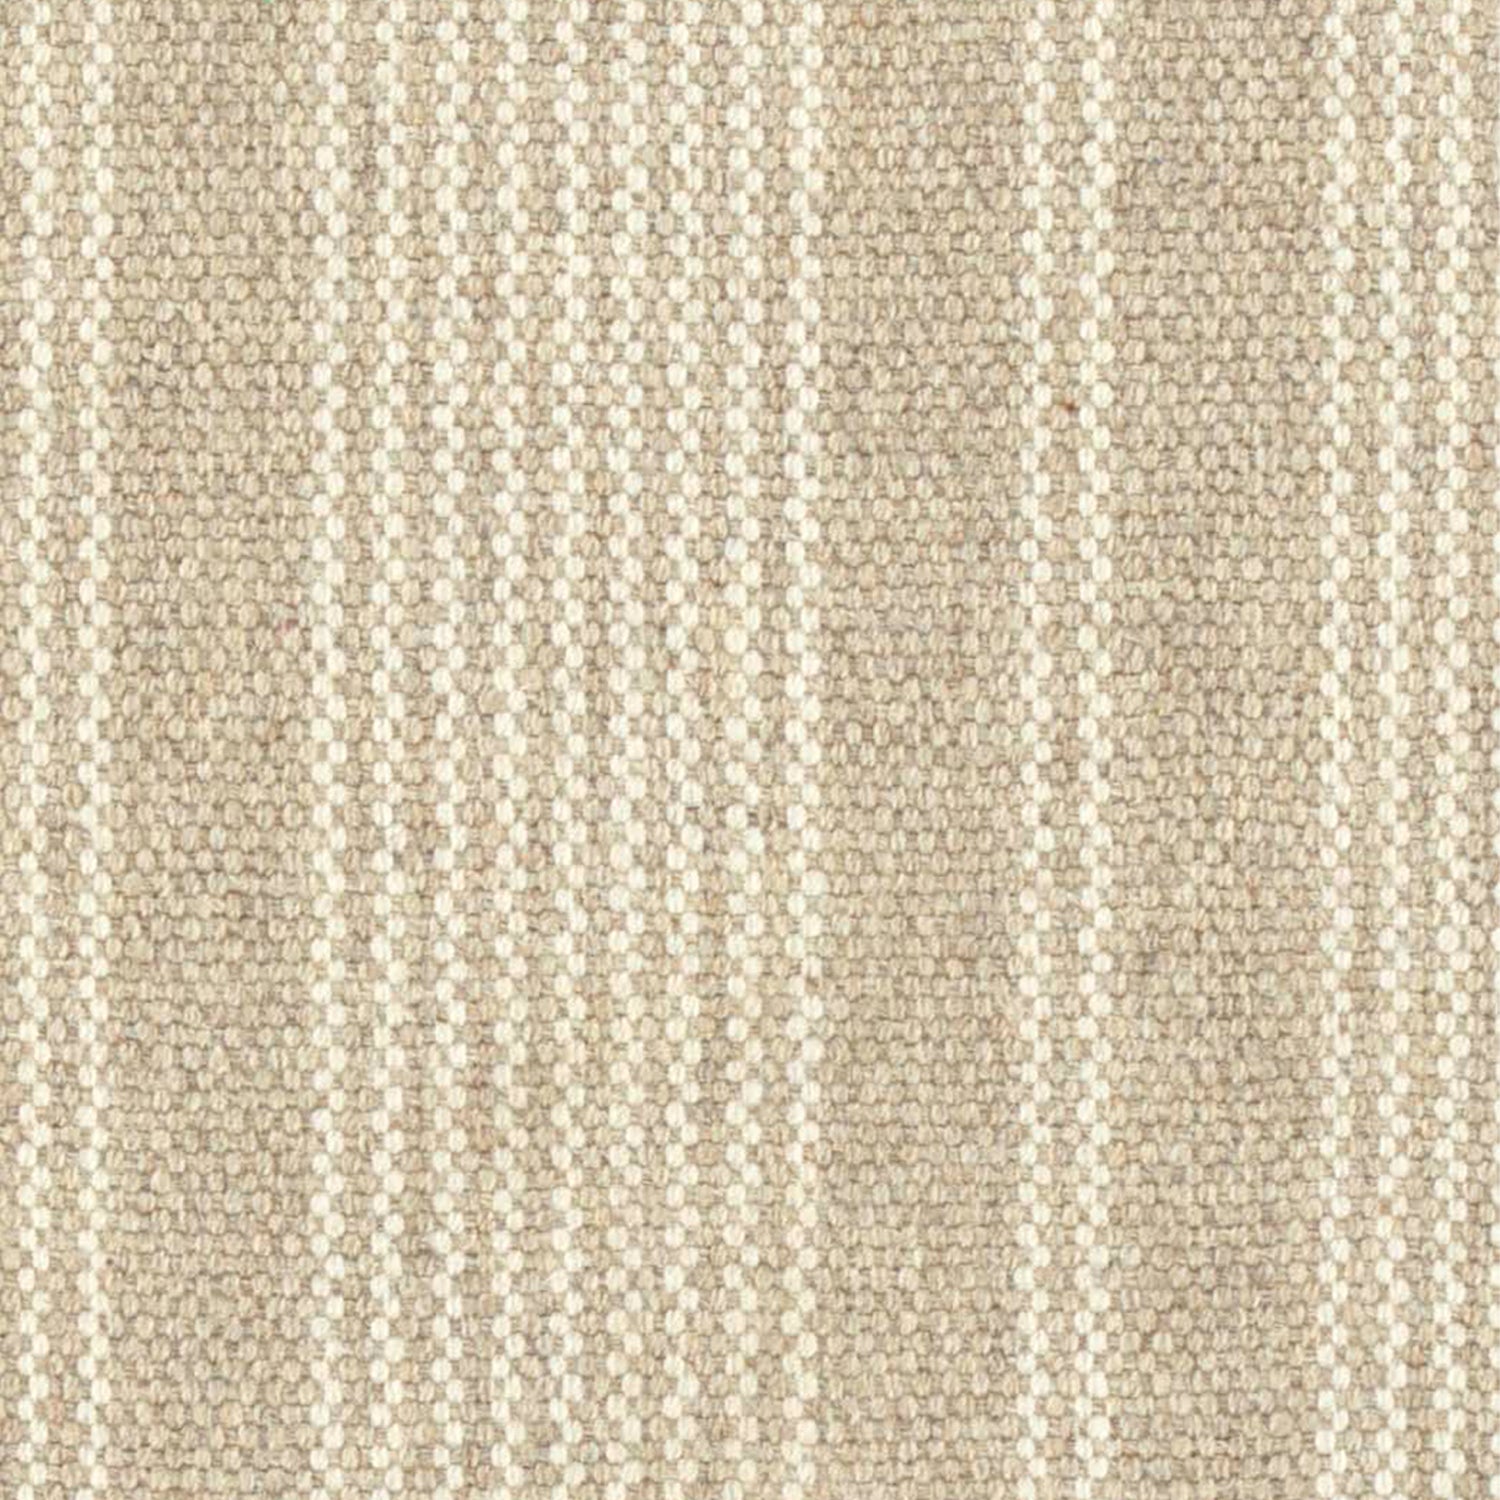 Wool broadloom carpet swatch in a variegated stripe weave in cream and tan.